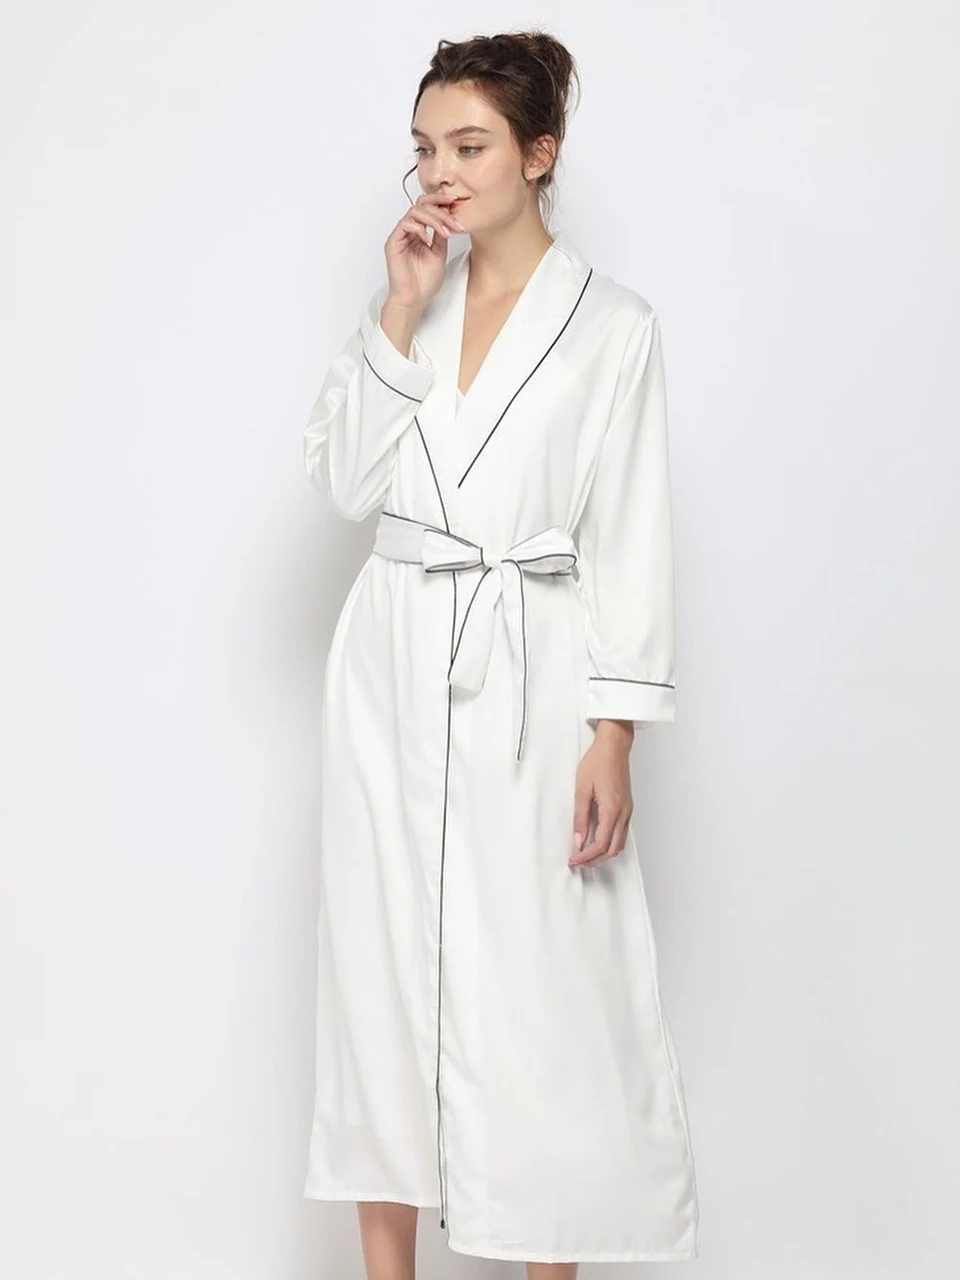 

Elegant Nightie White Nightgown Robes For Women Pajama Full Sleeve Bathrobe Female Nightwear Mid-Calf Nightdress Satin Sleepwear